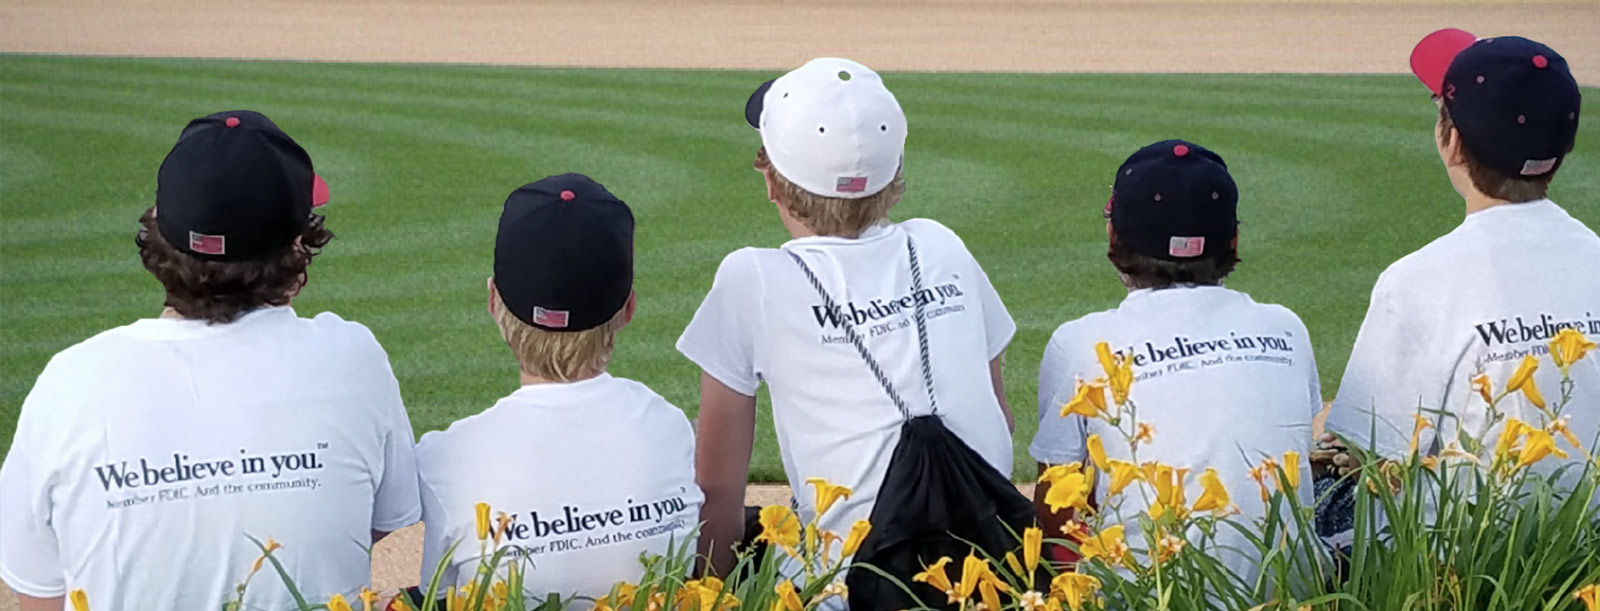 Little league baseball team wearing Bank branded tshirts.